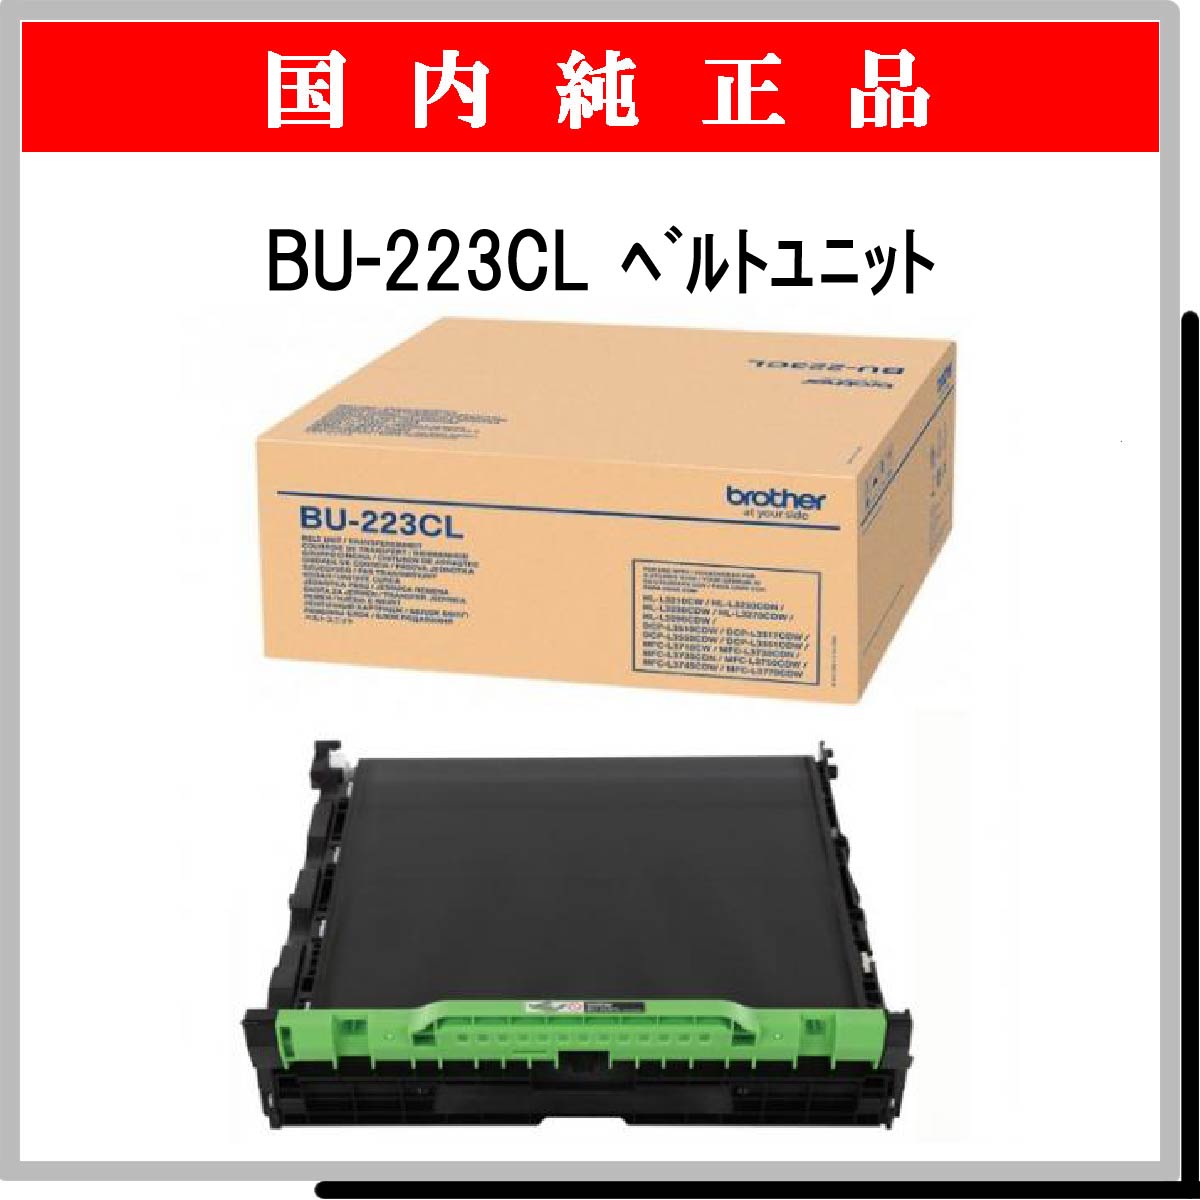 BU-223CL ﾍﾞﾙﾄﾕﾆｯﾄ 純正